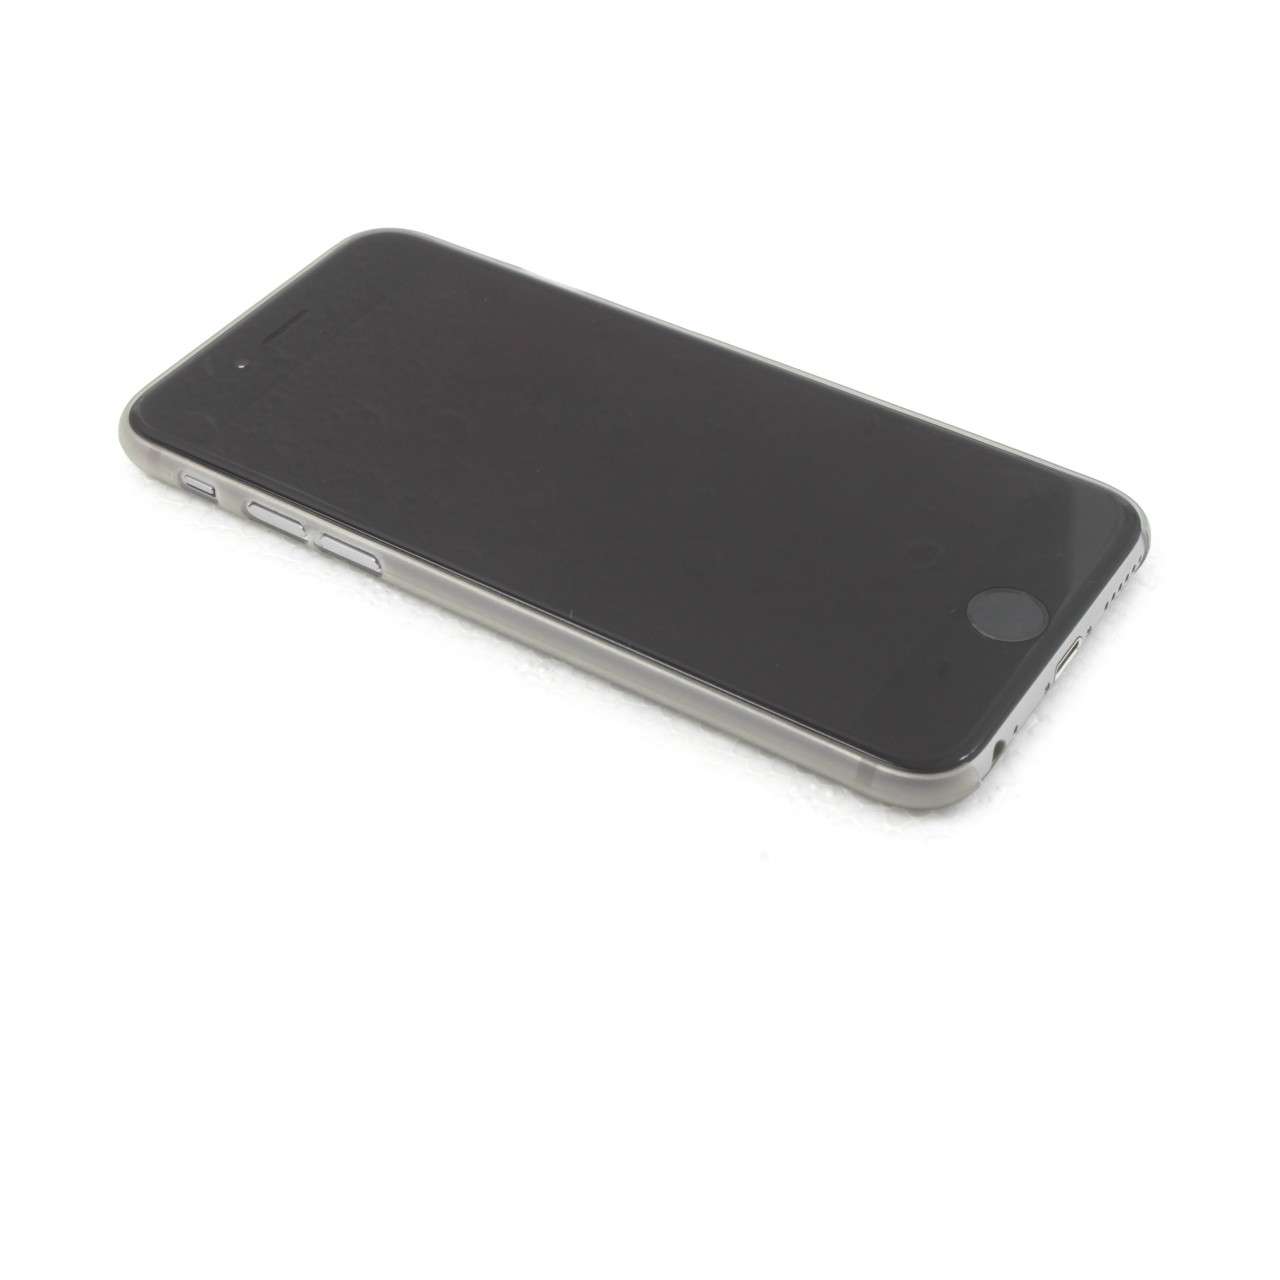 Husa protectie iPhone 6 PWR Perfect Fit Ultra Slim Gri 2mm plastic dur